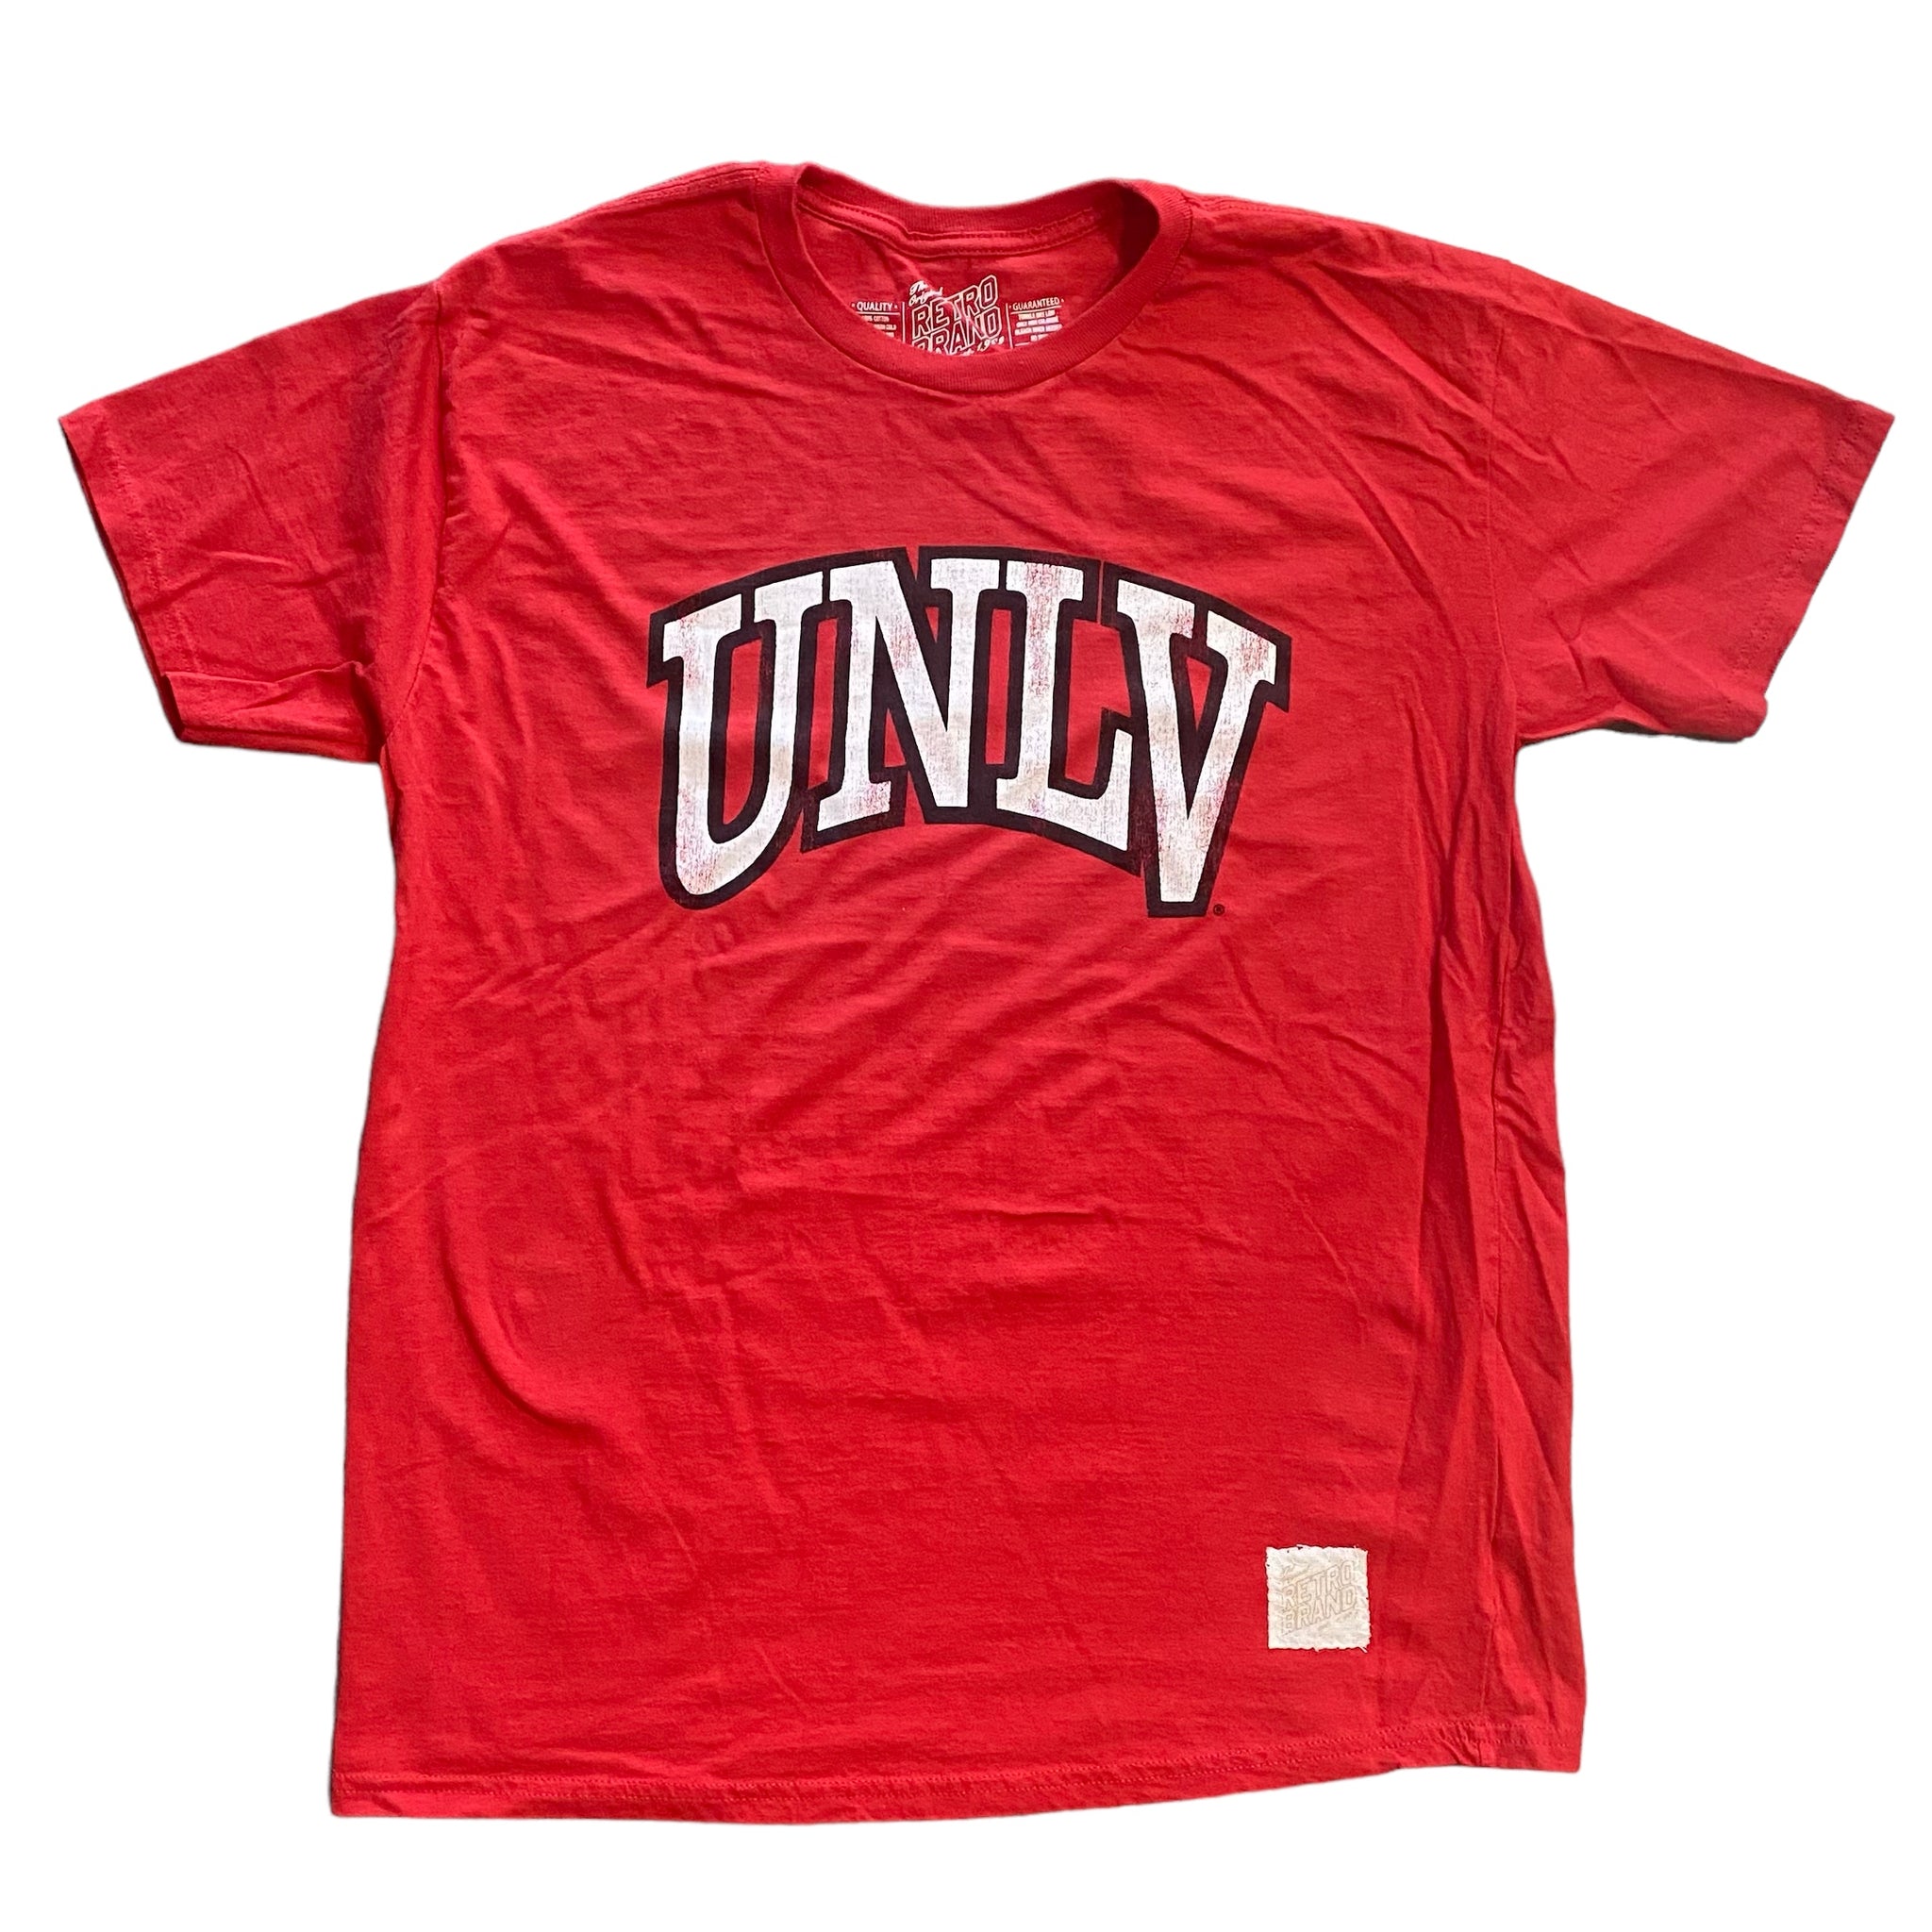 UNLV Men's Retro Brand T-Shirt